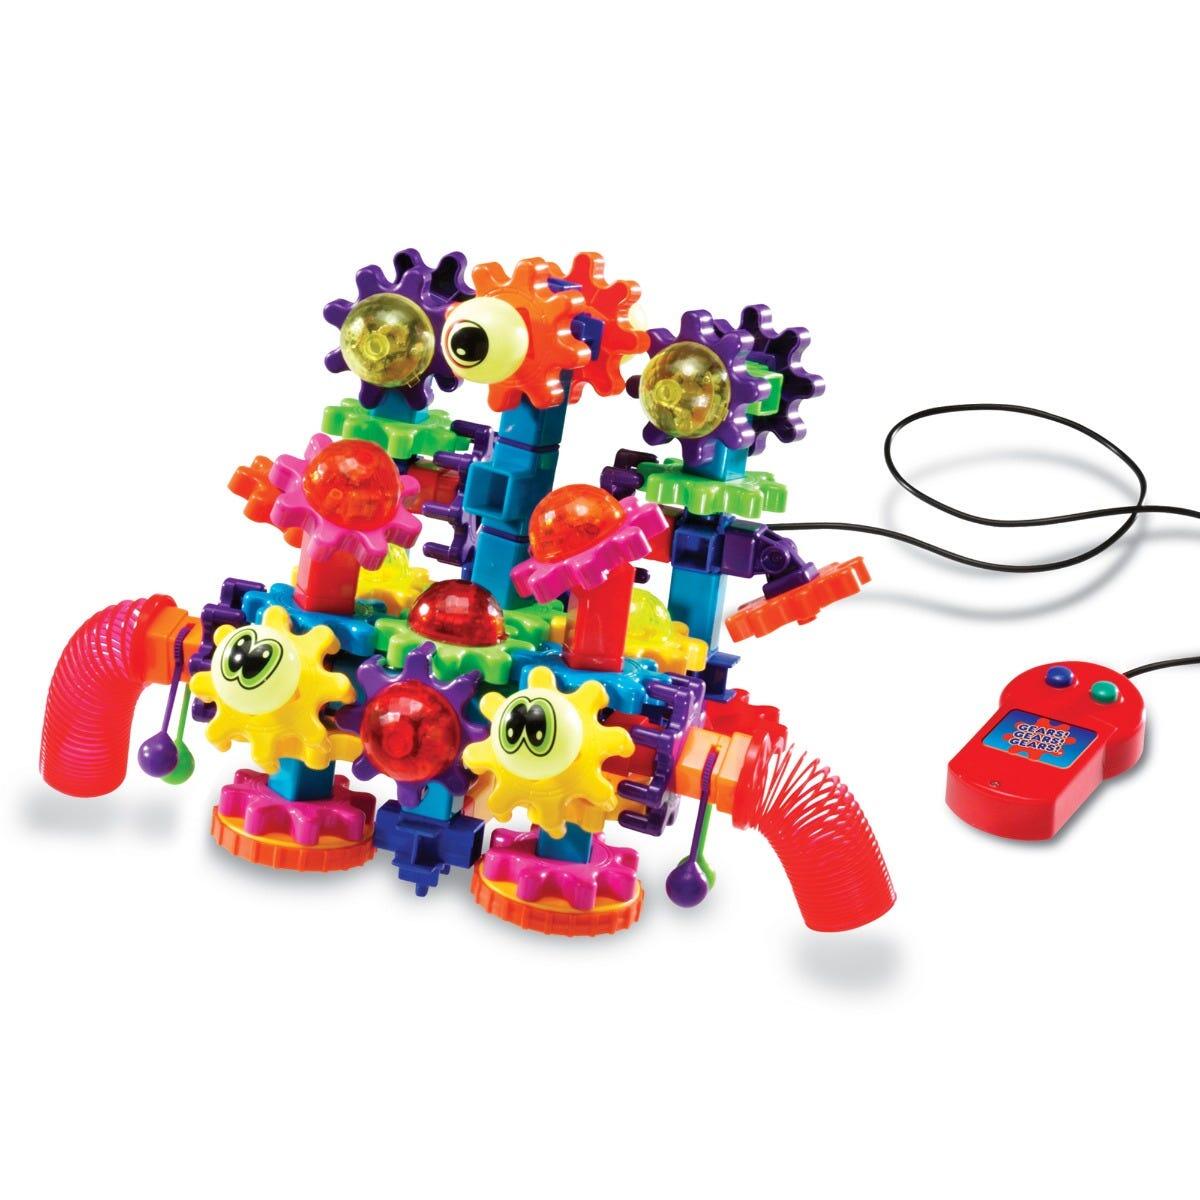 Setul micutului constructor Waxky PlayLearn Toys